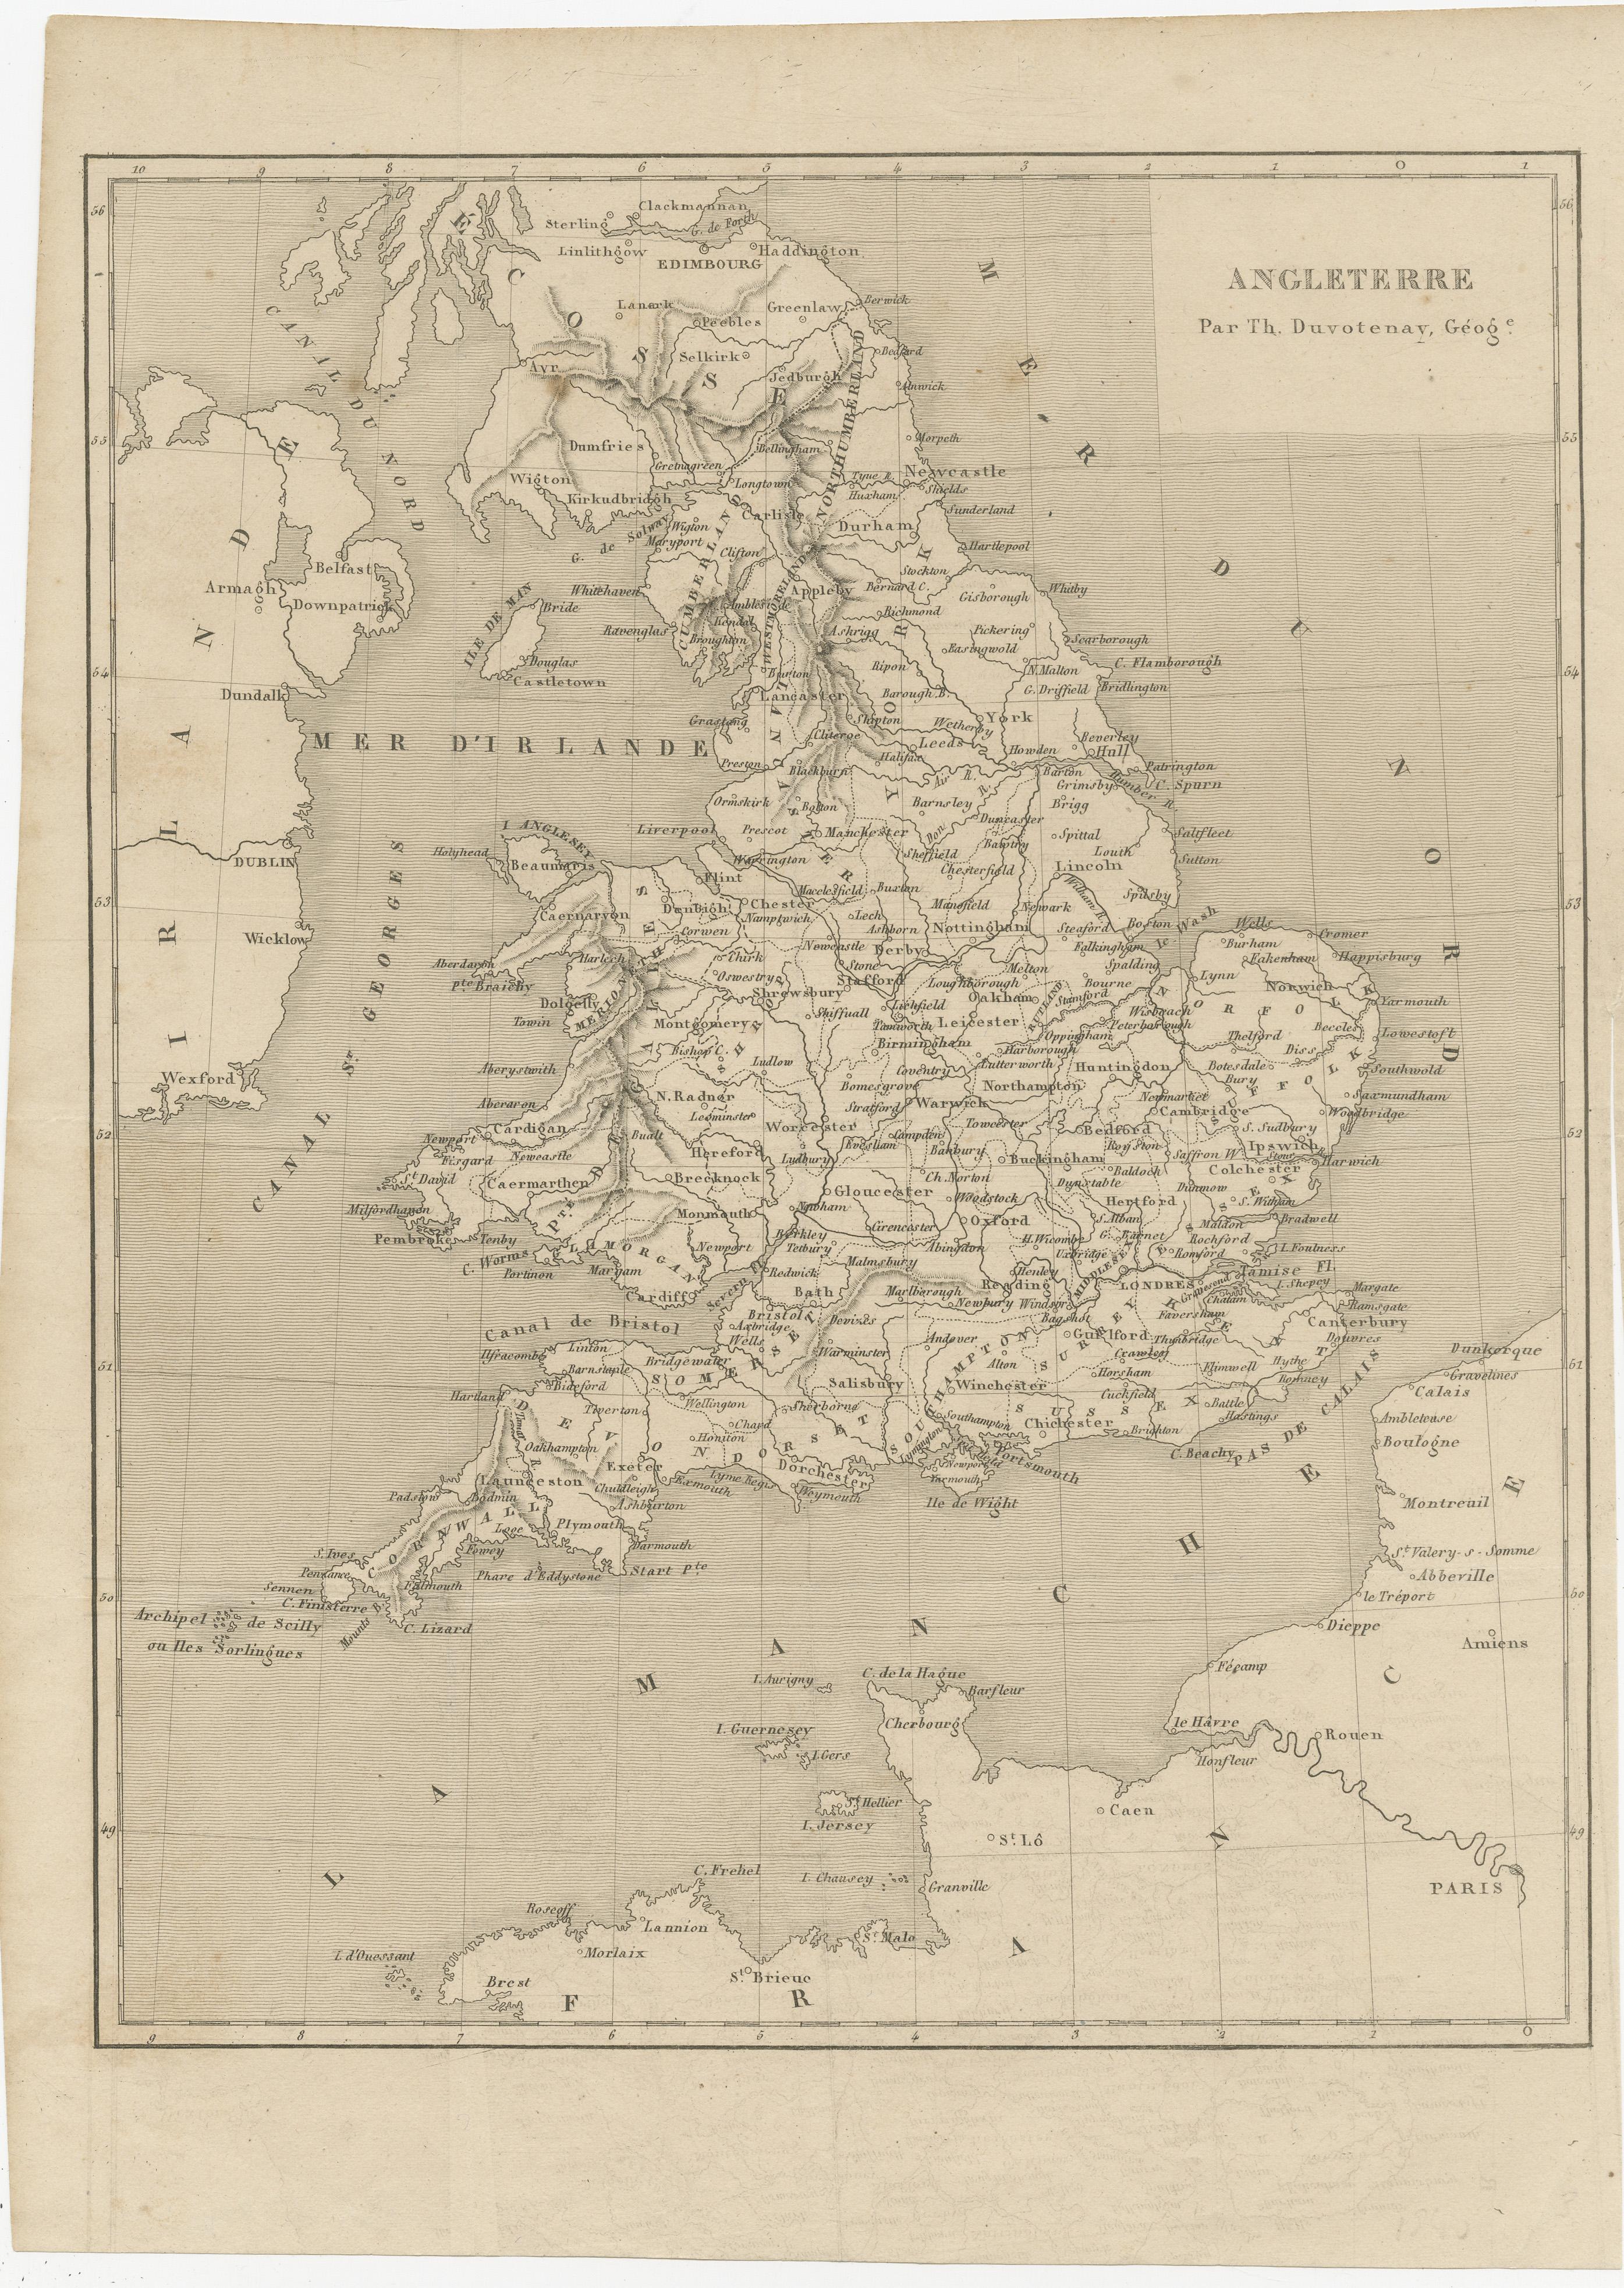 Antique map titled 'Angleterre'. Original antique map of England. Engraved by Th. Duvotenay. Originates from 'Complement de L'Encyclopedie Moderne ou Dictionnaire Abrege des Sciences (..)' published 1879.